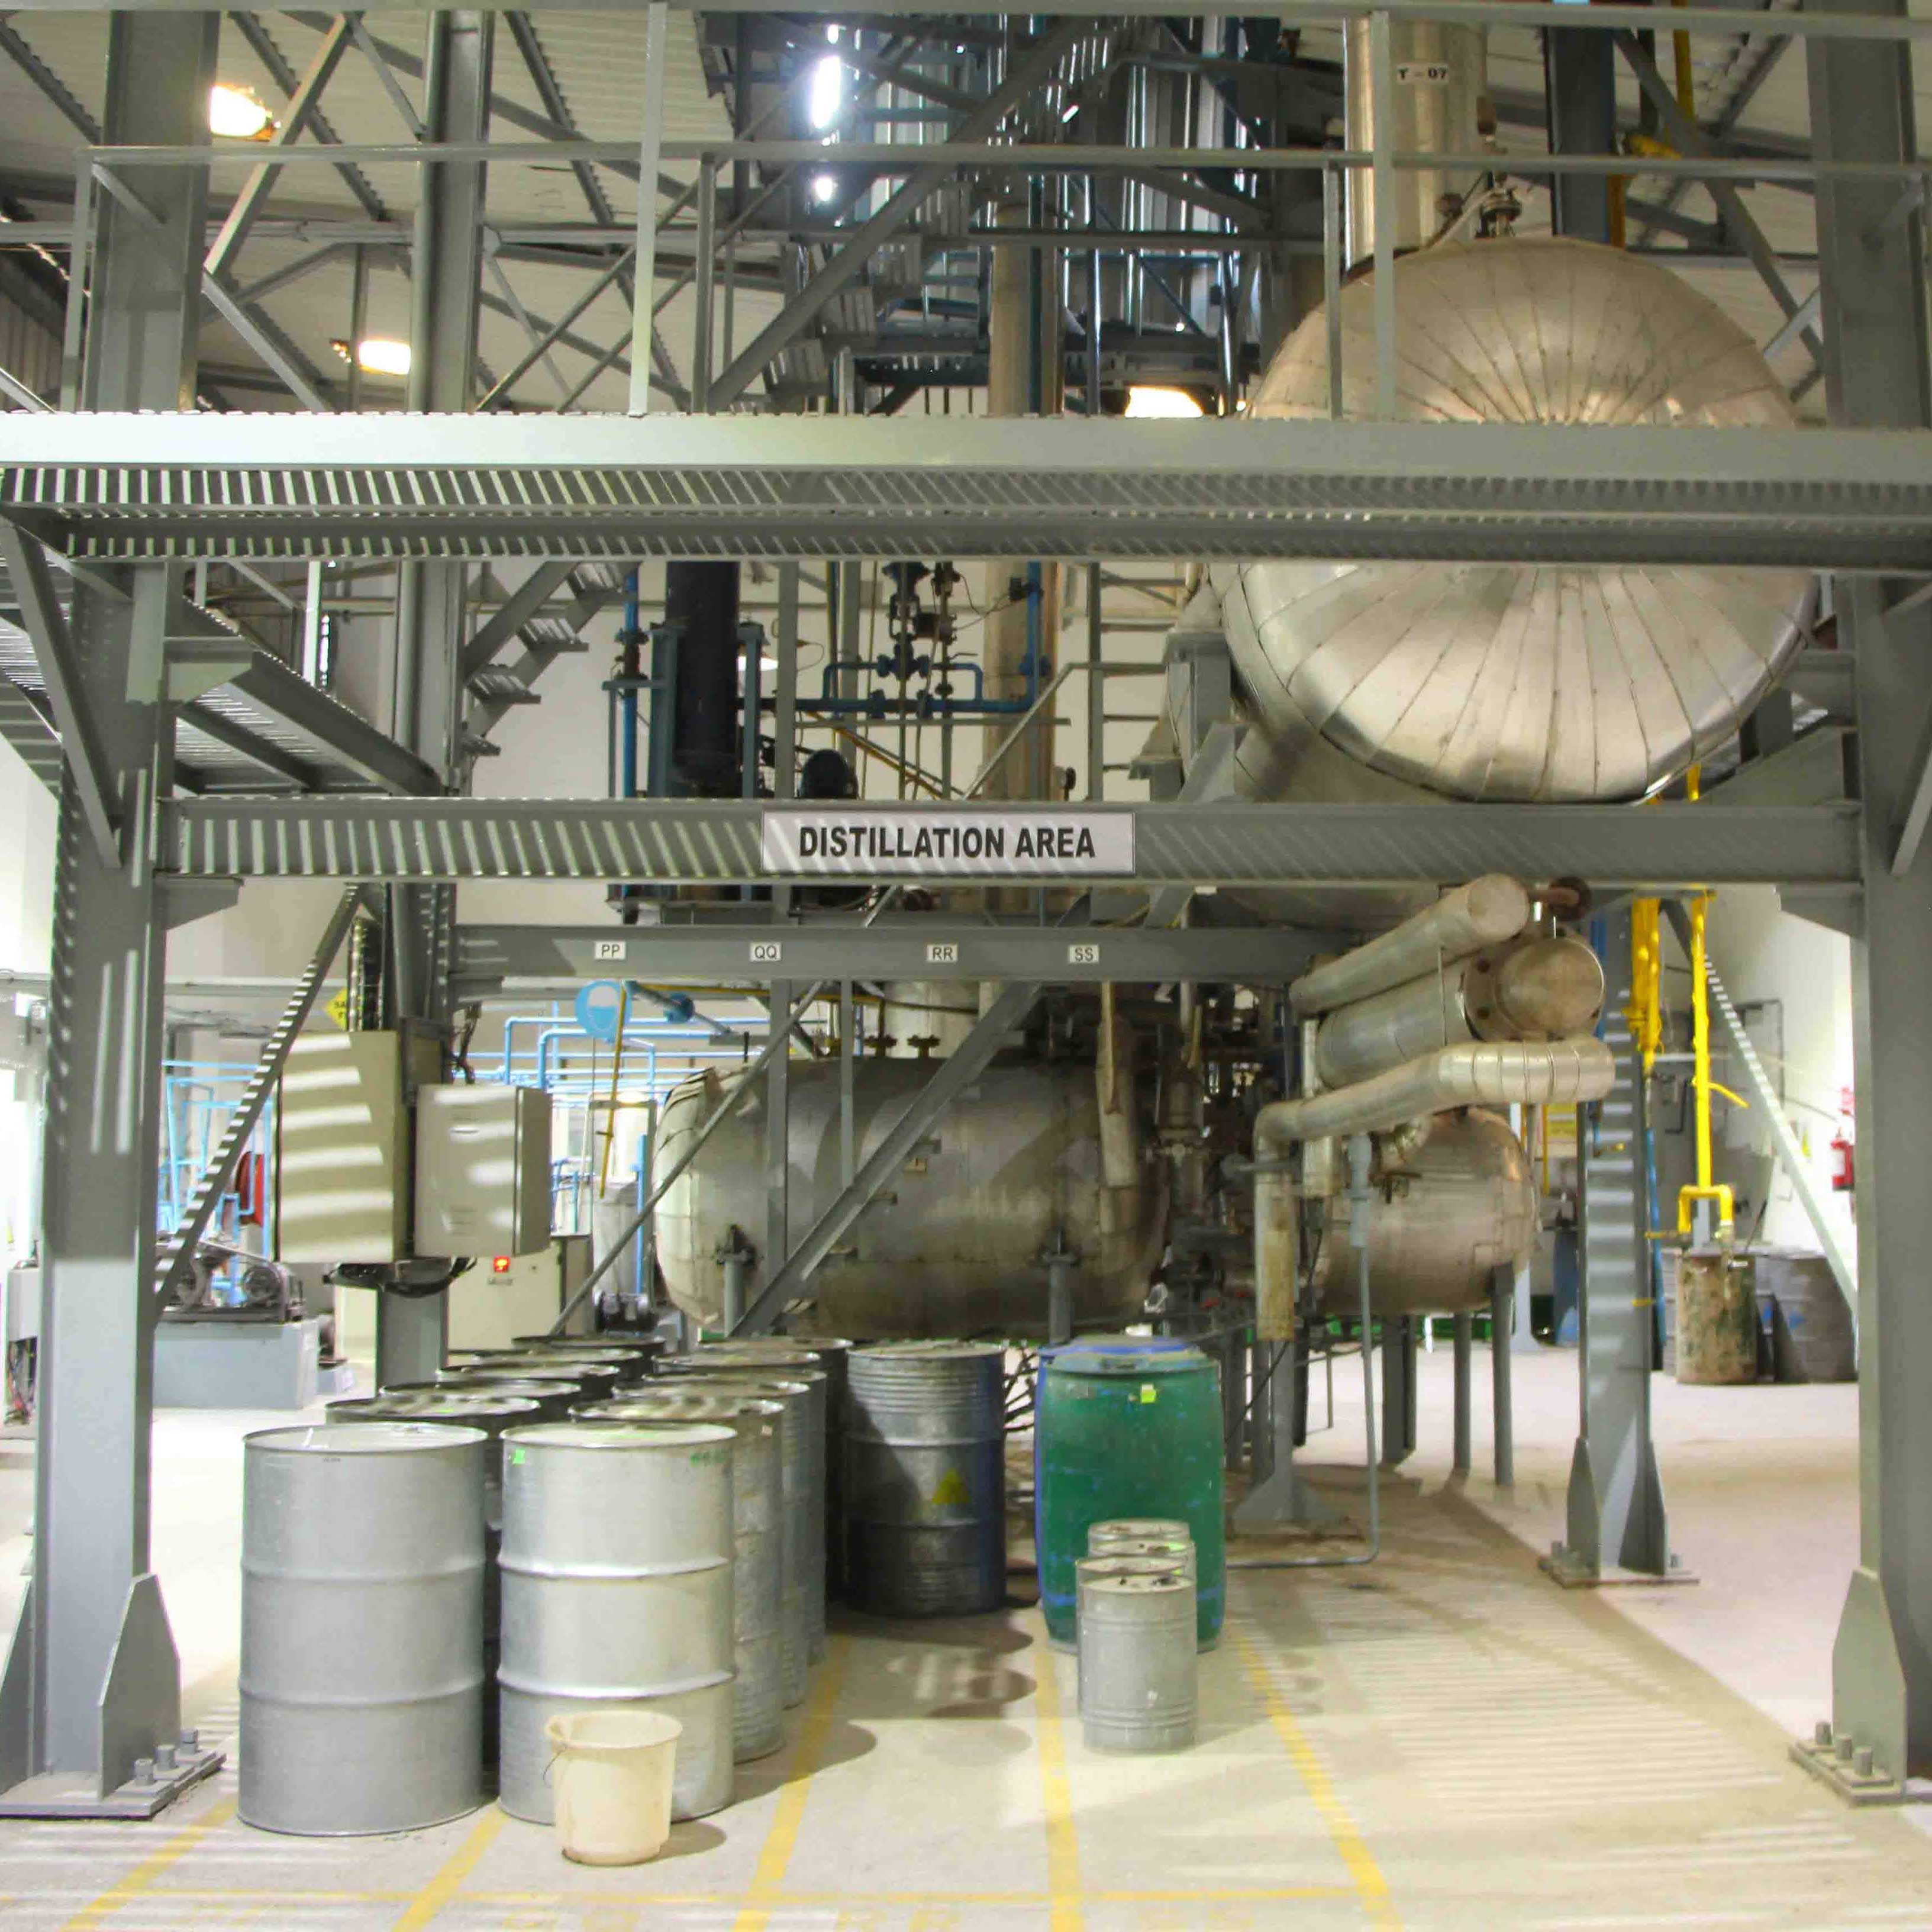 Factory distillation area